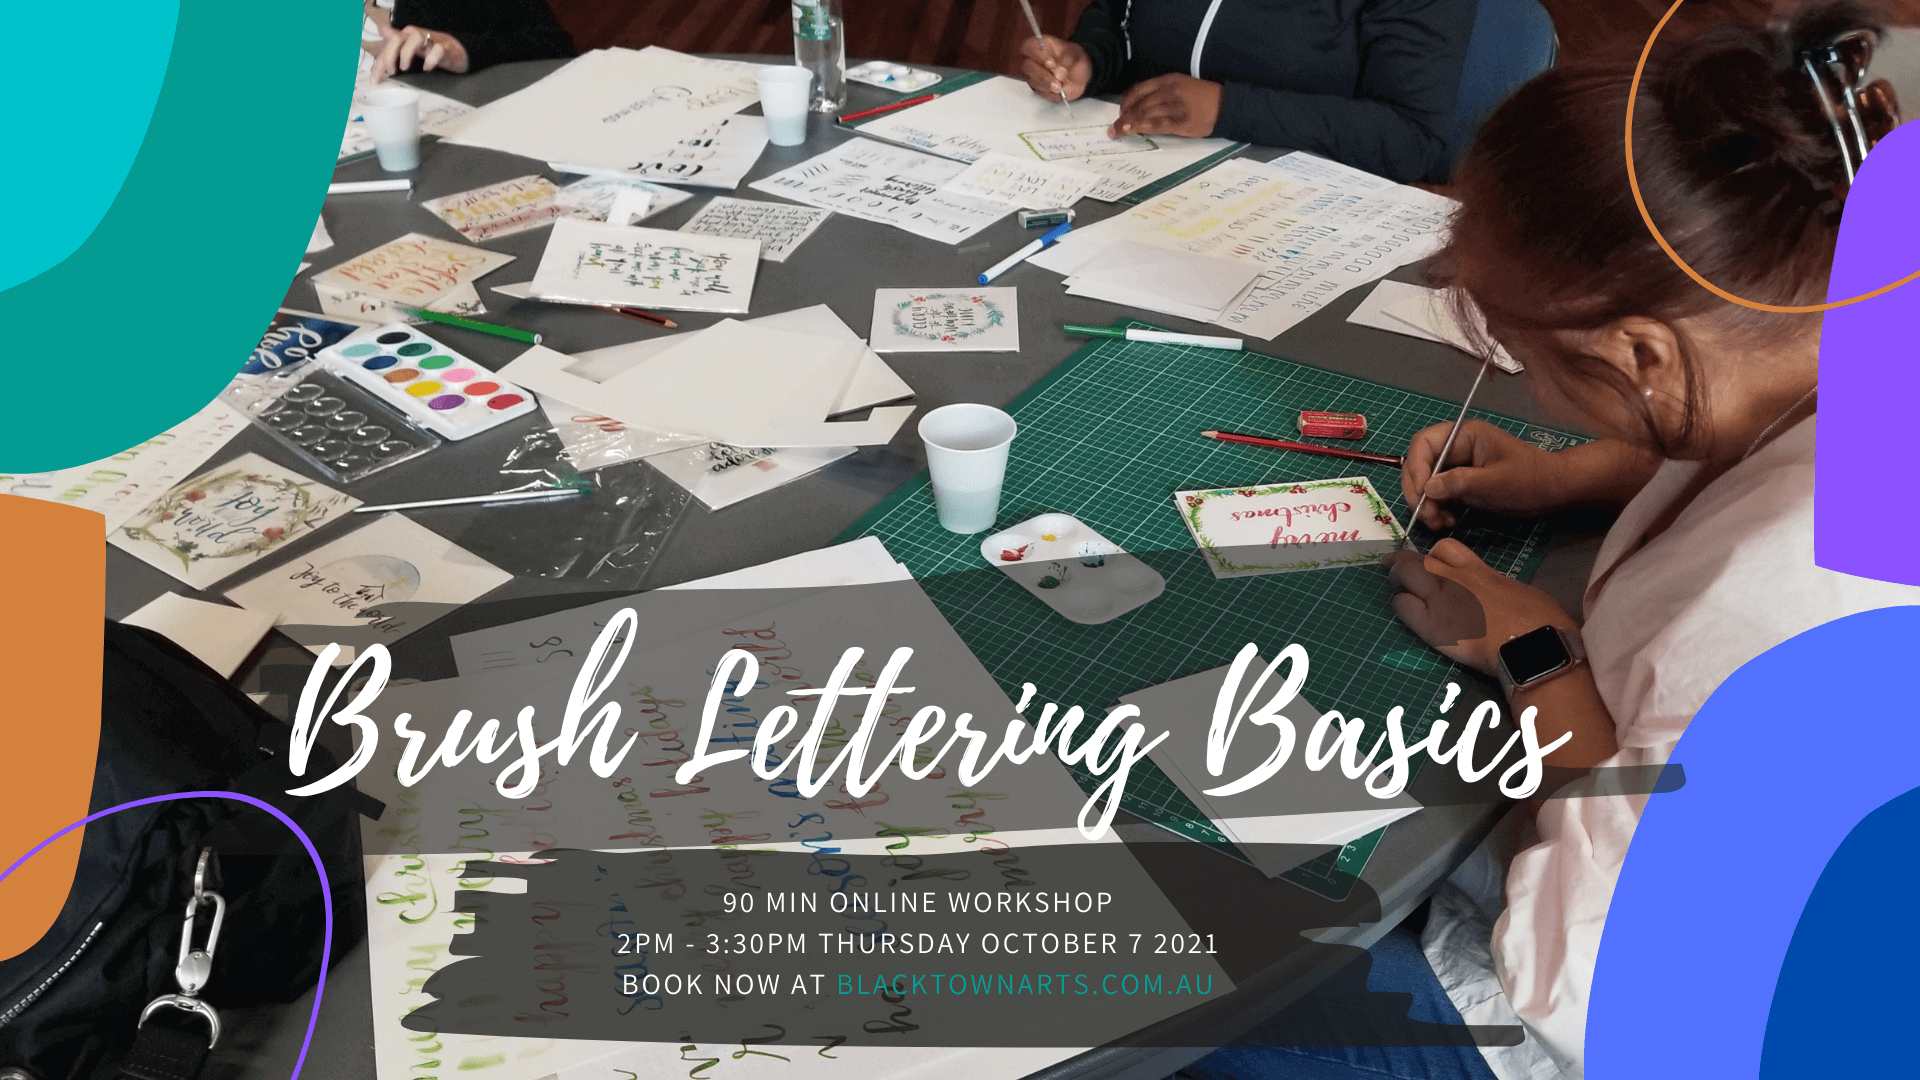 Brush Lettering Basics 7 October 2021 2pm-3:30pm - Book at blacktownarts.com.au